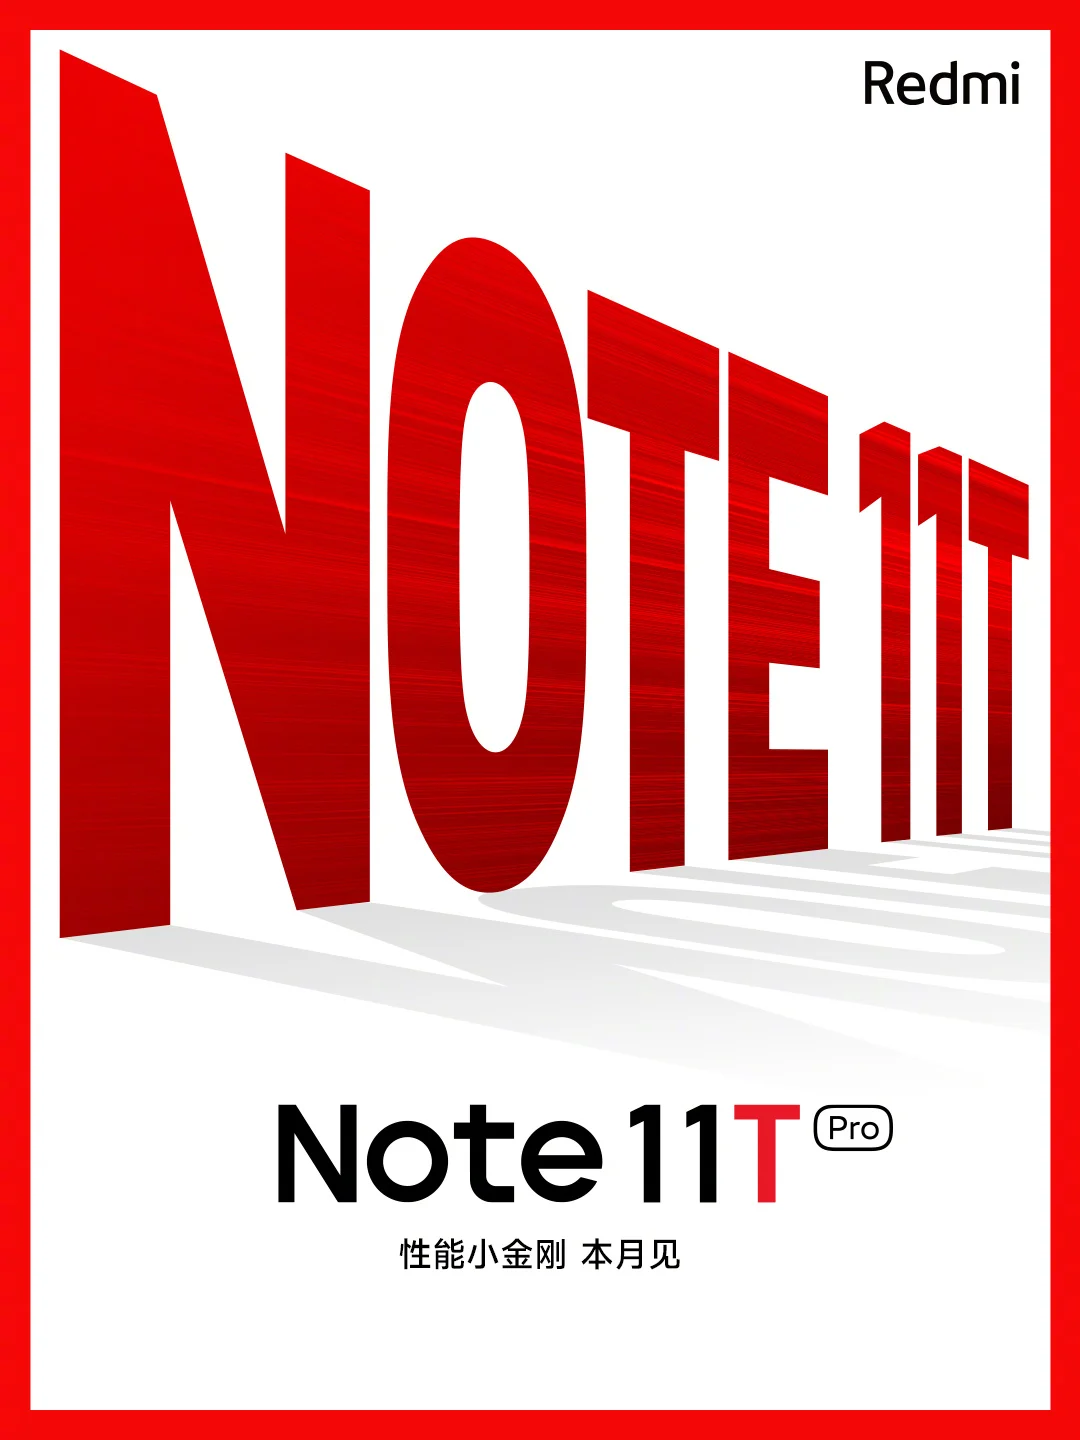 Redmi Note 11T series announcement